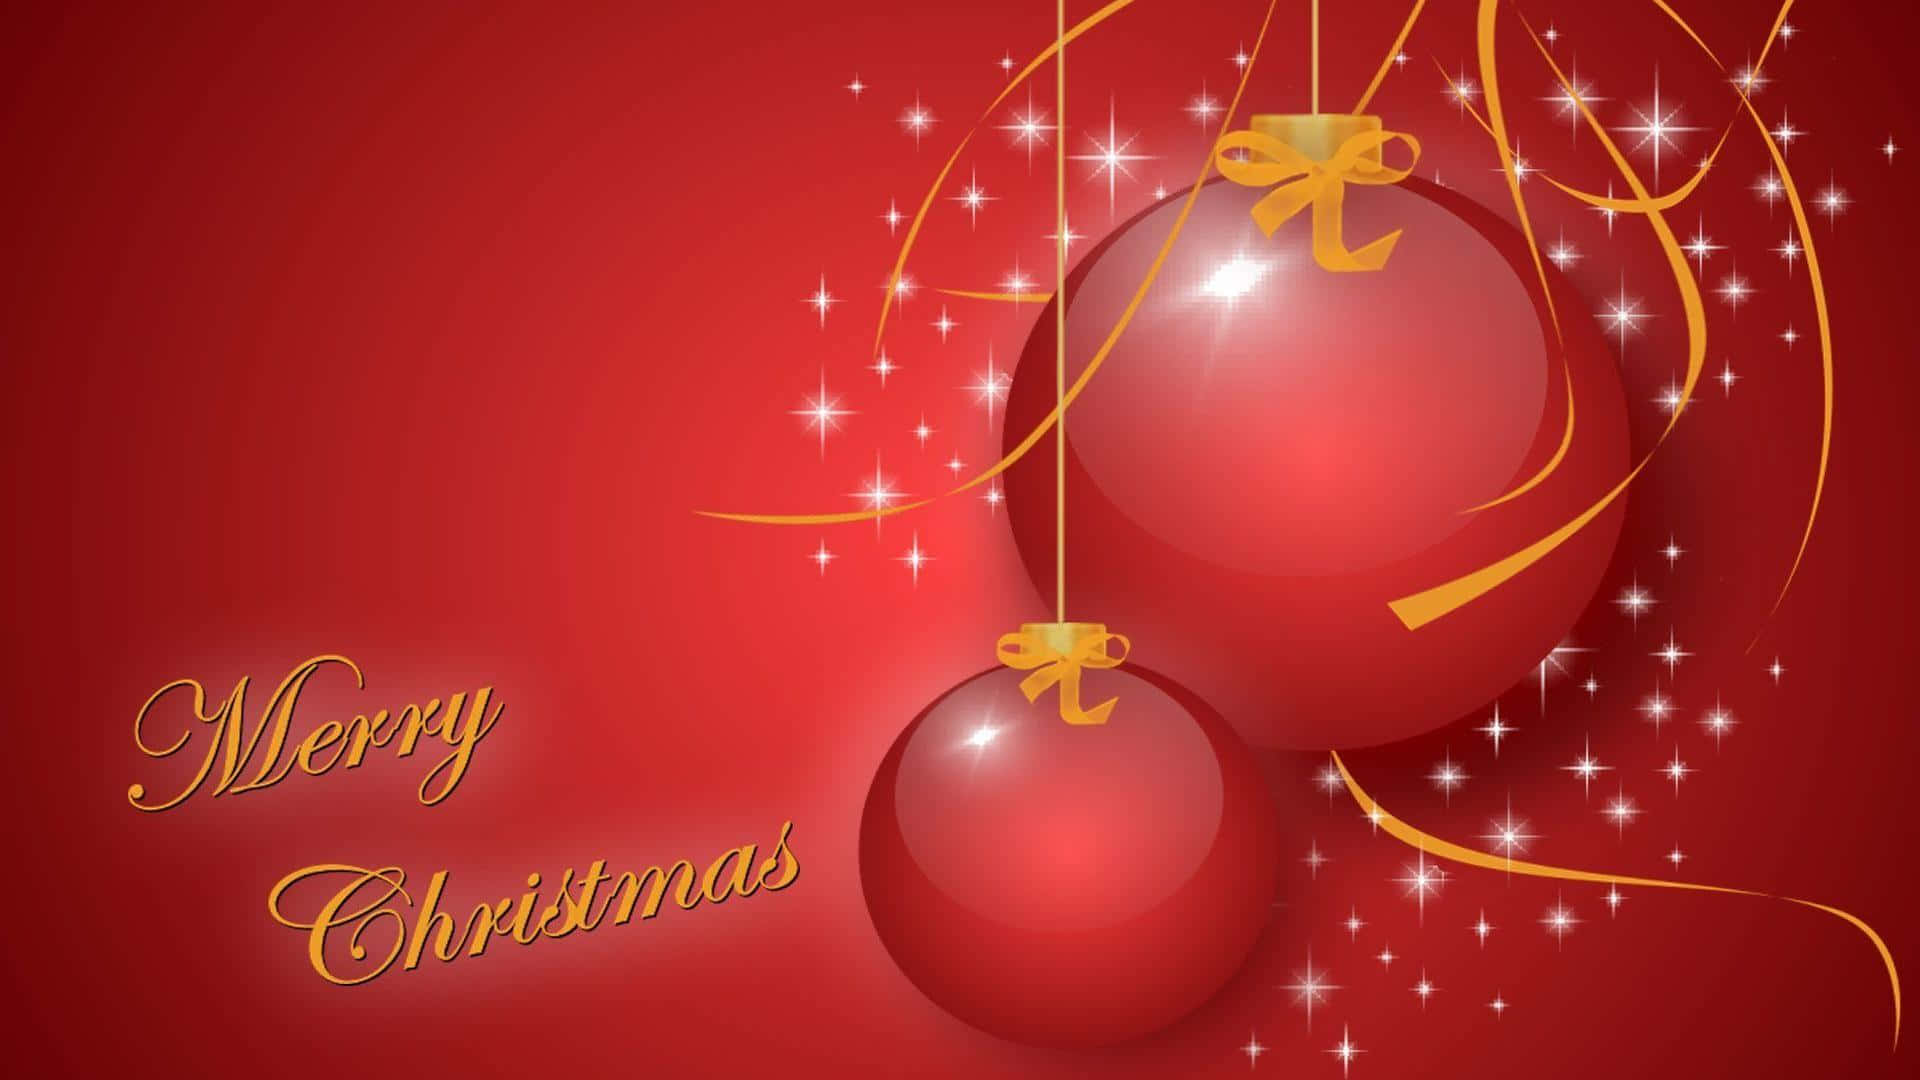 Spread Joy This Christmas with a Customized Card